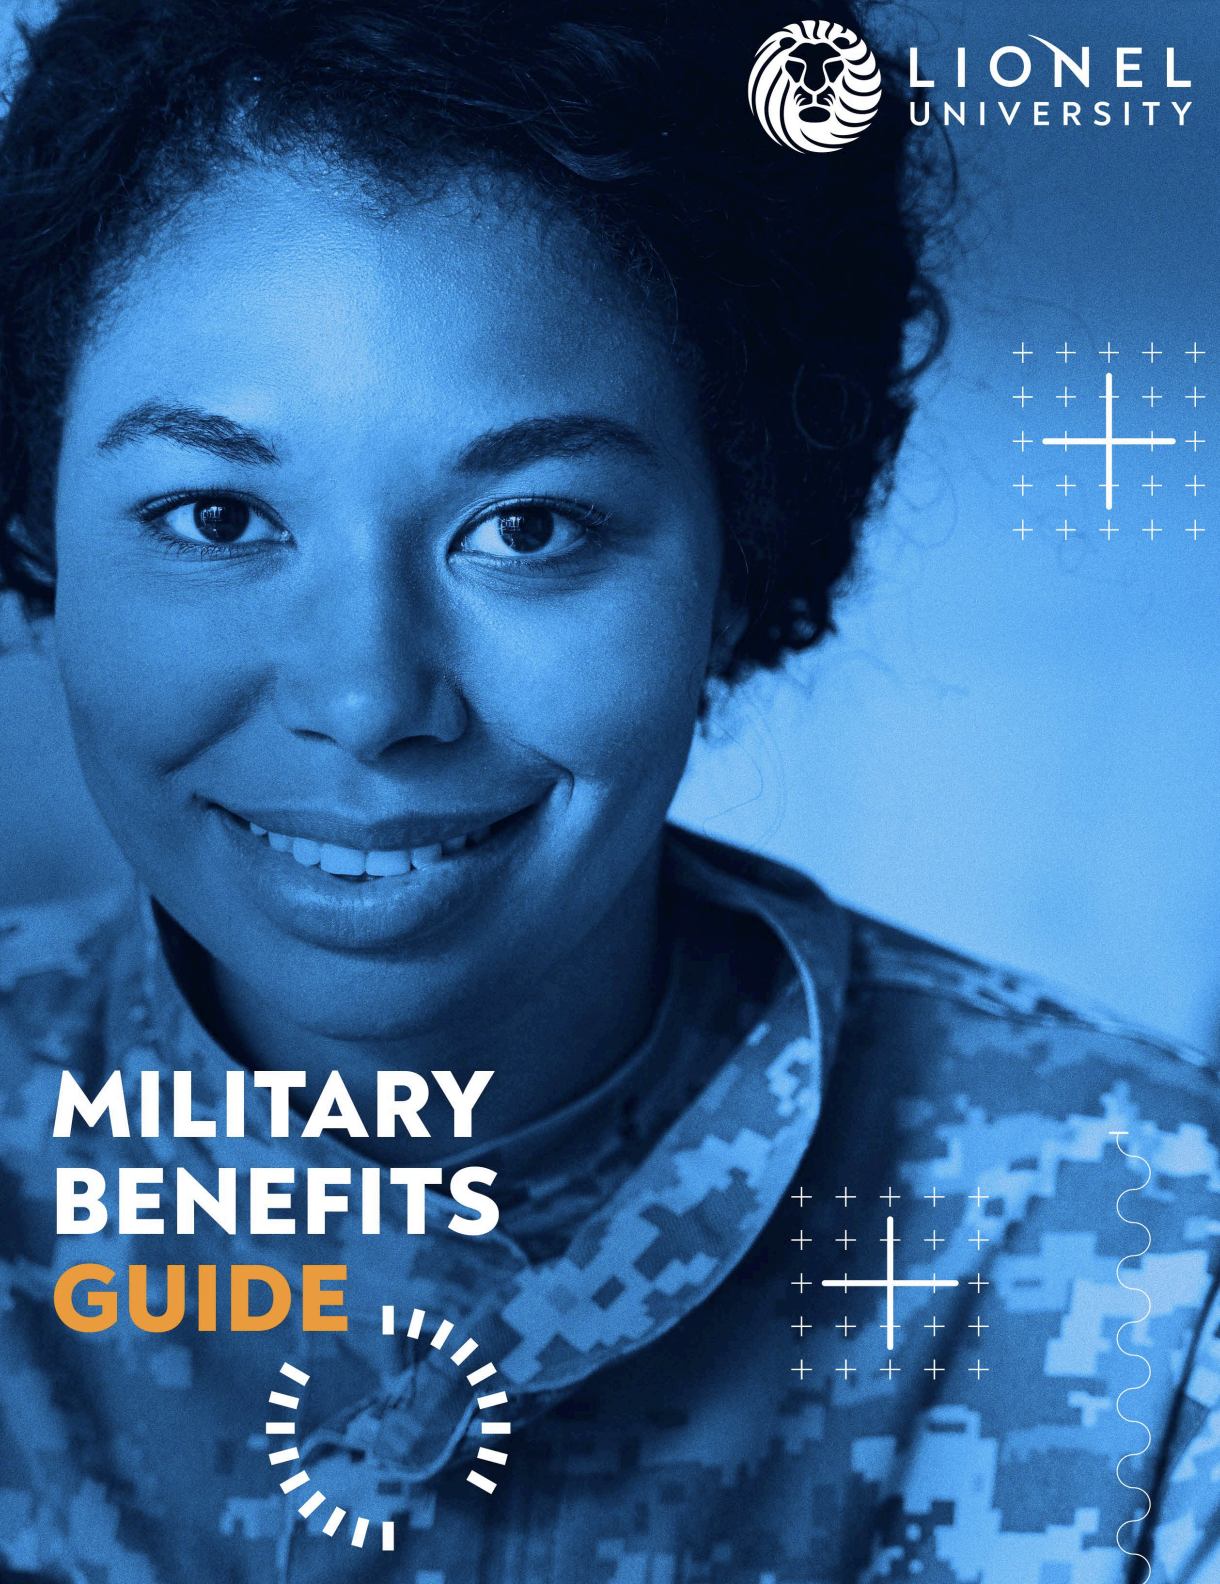 Lionel-military-guide-cover